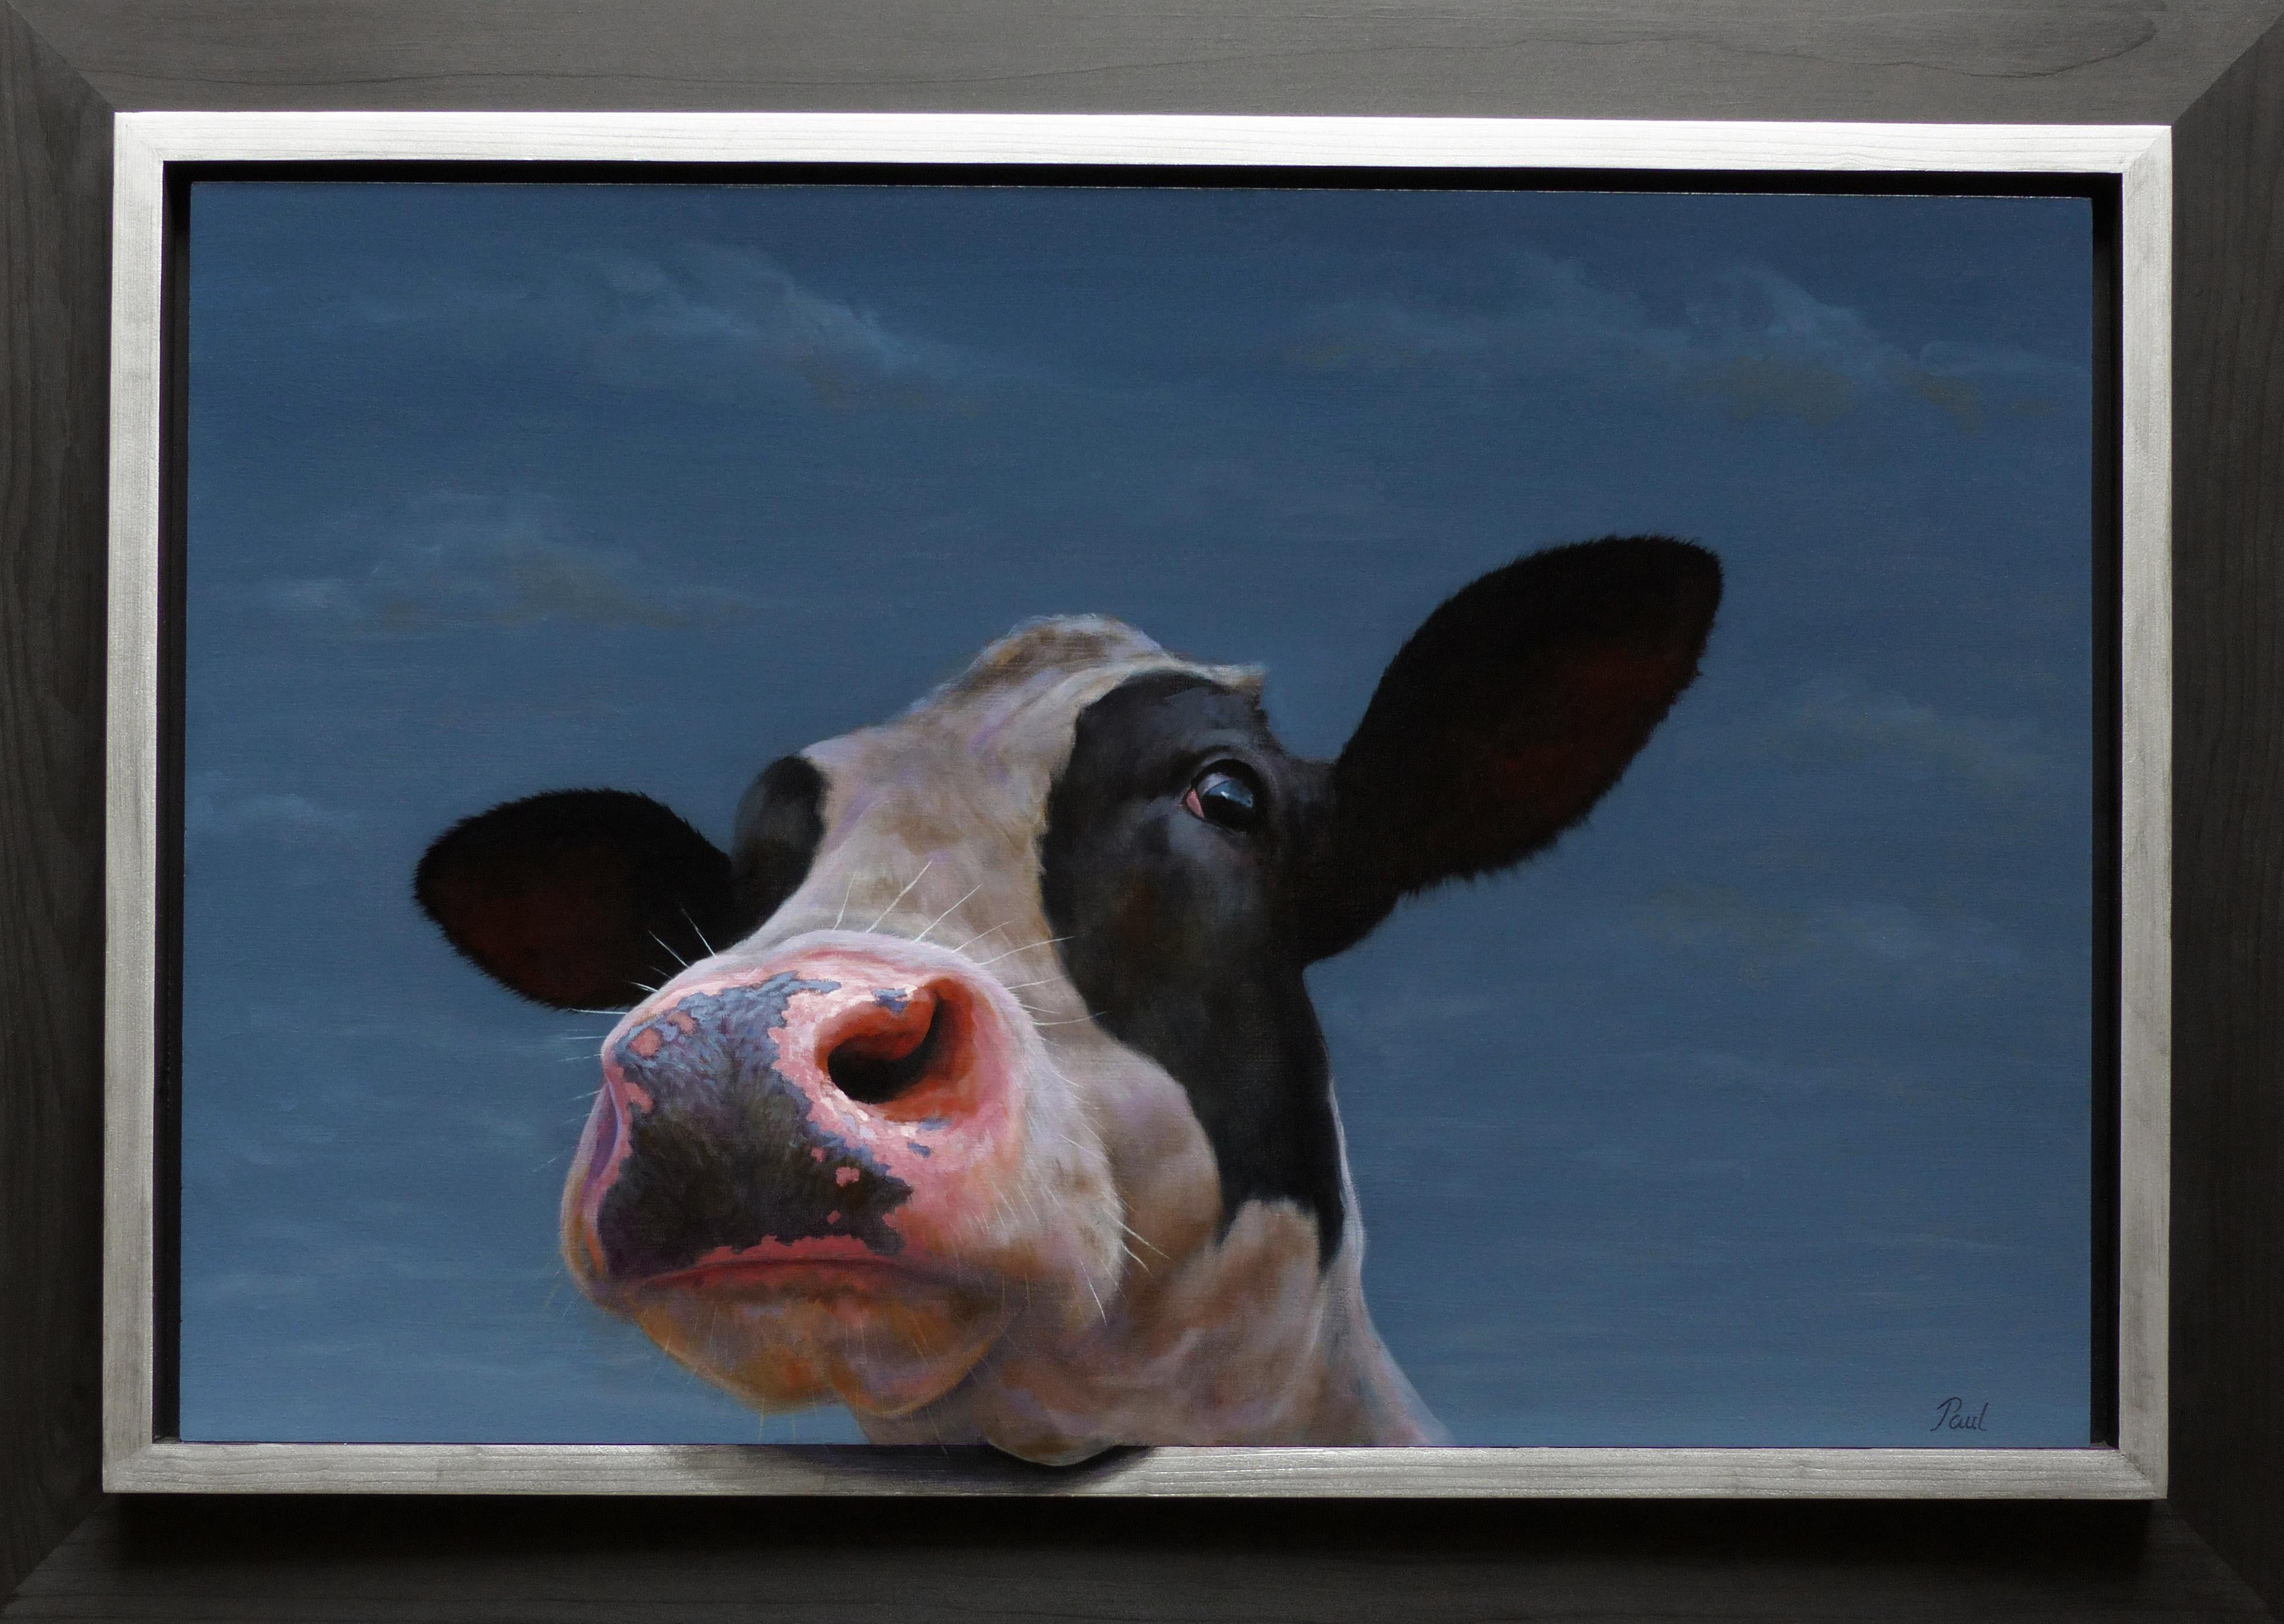 Paul Jansen Figurative Painting - "Calf Portrait 388" Contemporary Dutch Oil Painting of a Cow